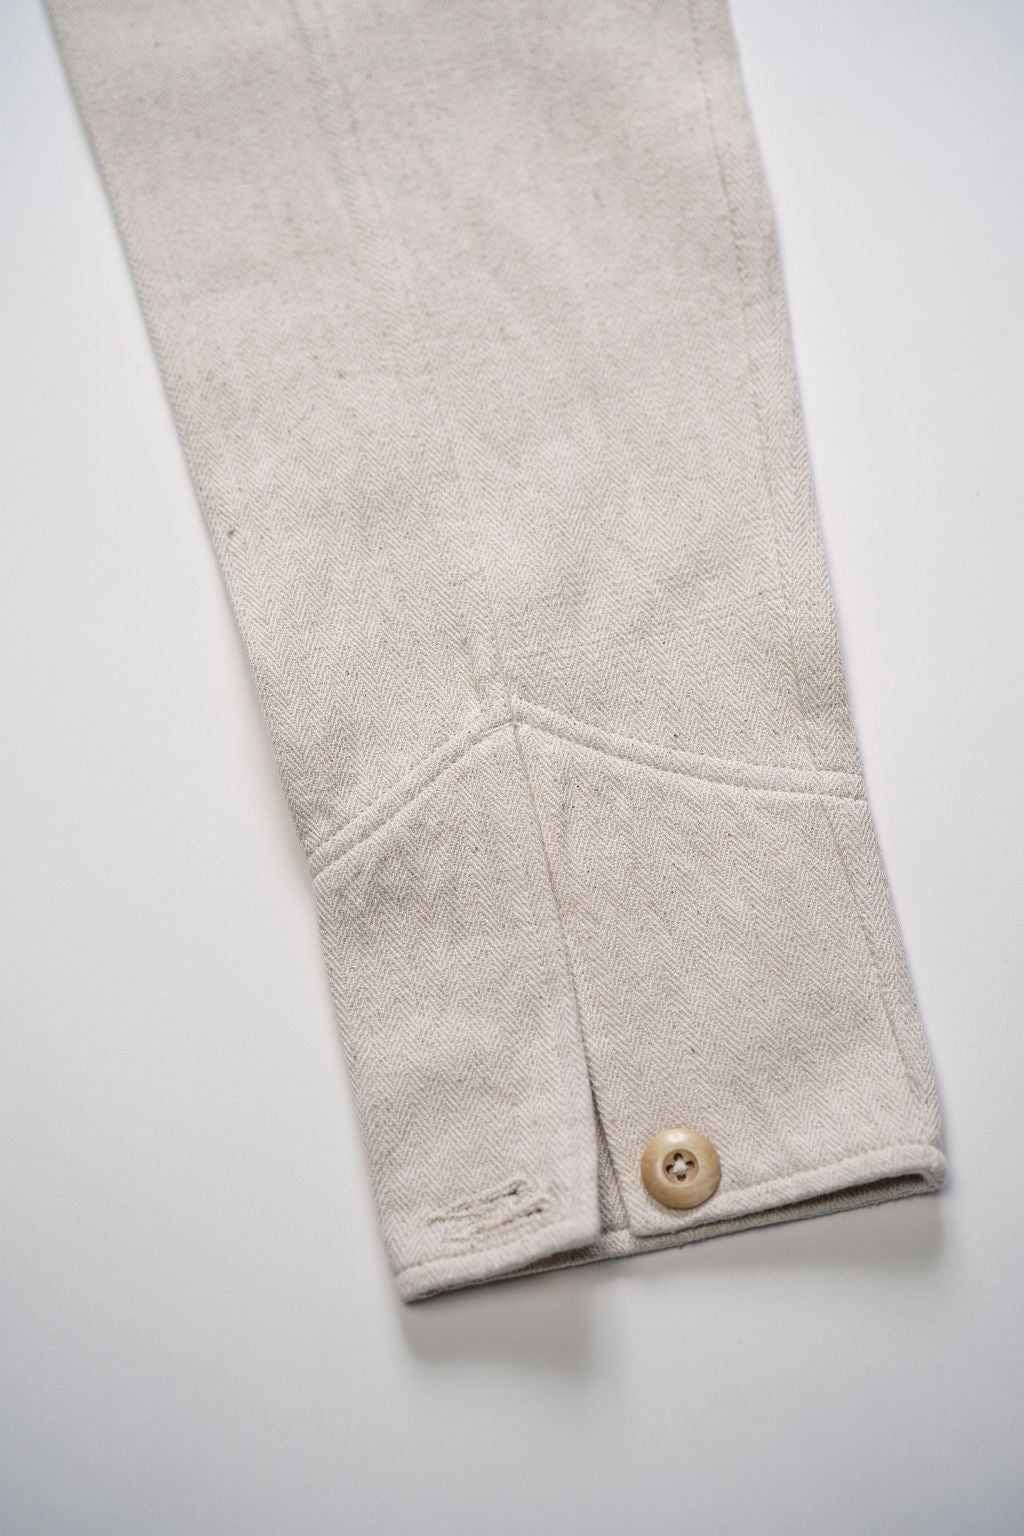 Indi + Ash Study Jacket - Handwoven Military Herringbone Natural